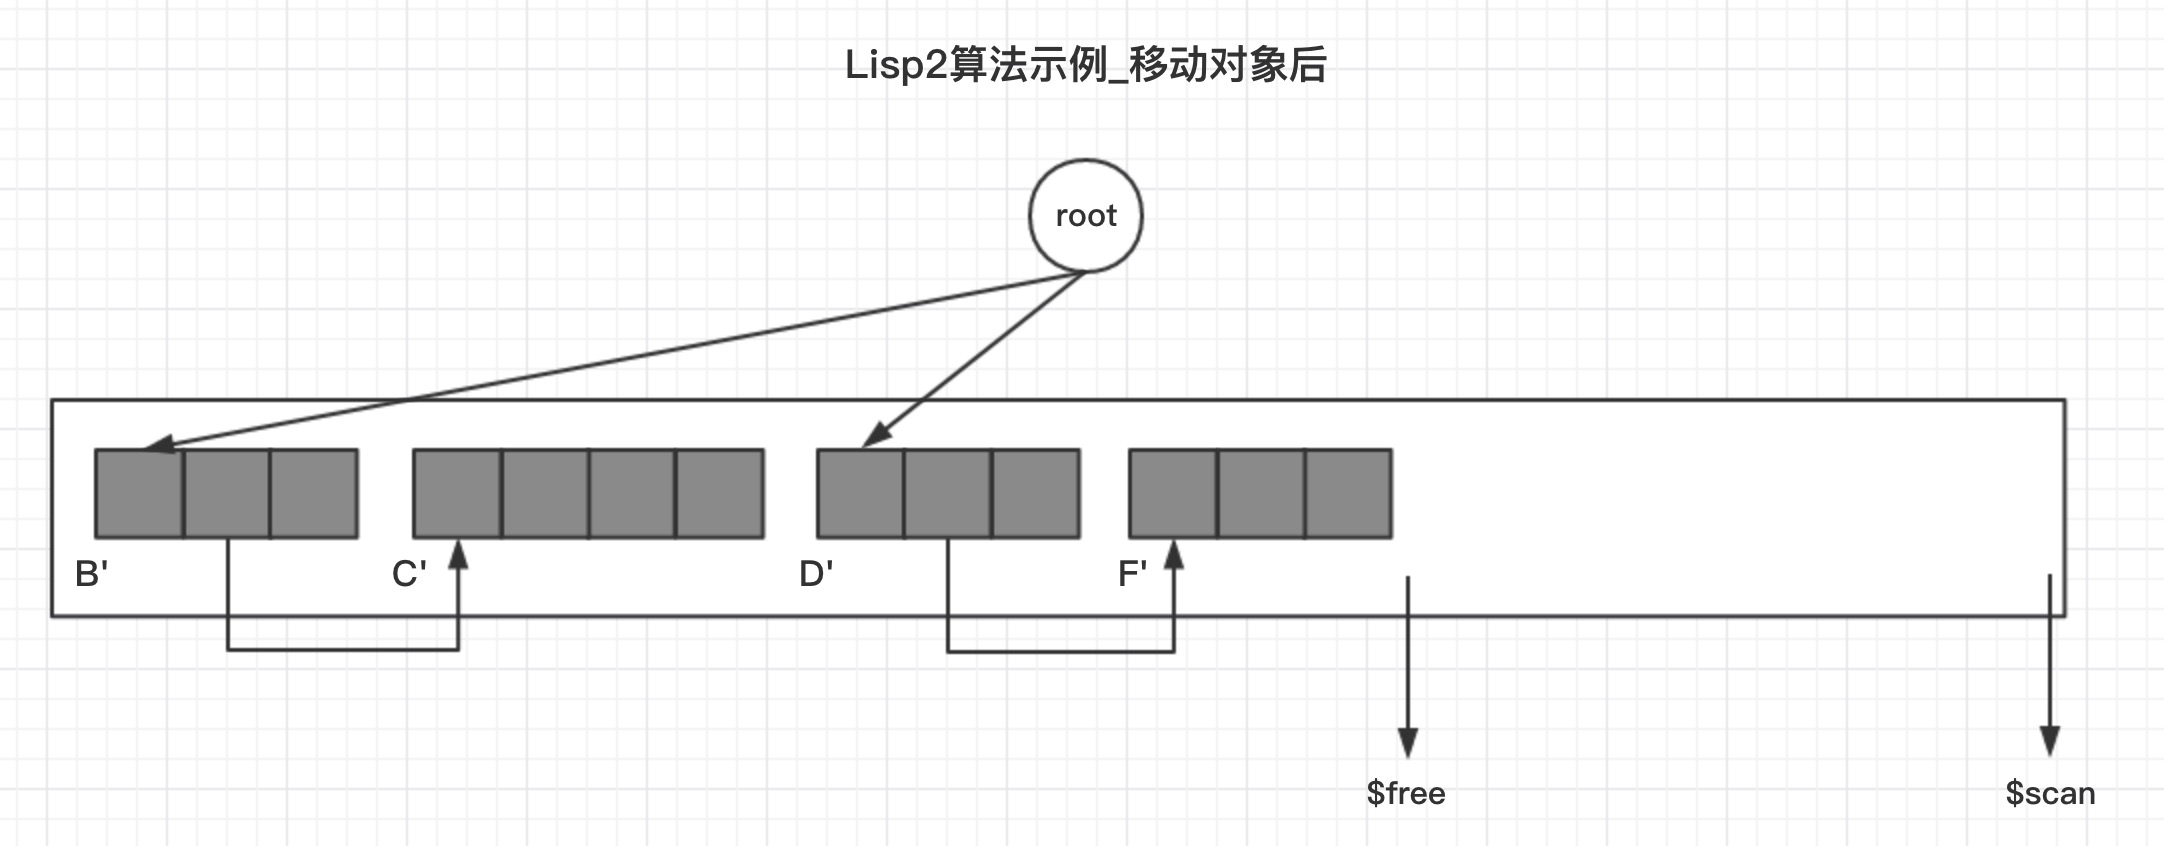 Lisp2算法示例_移动对象后